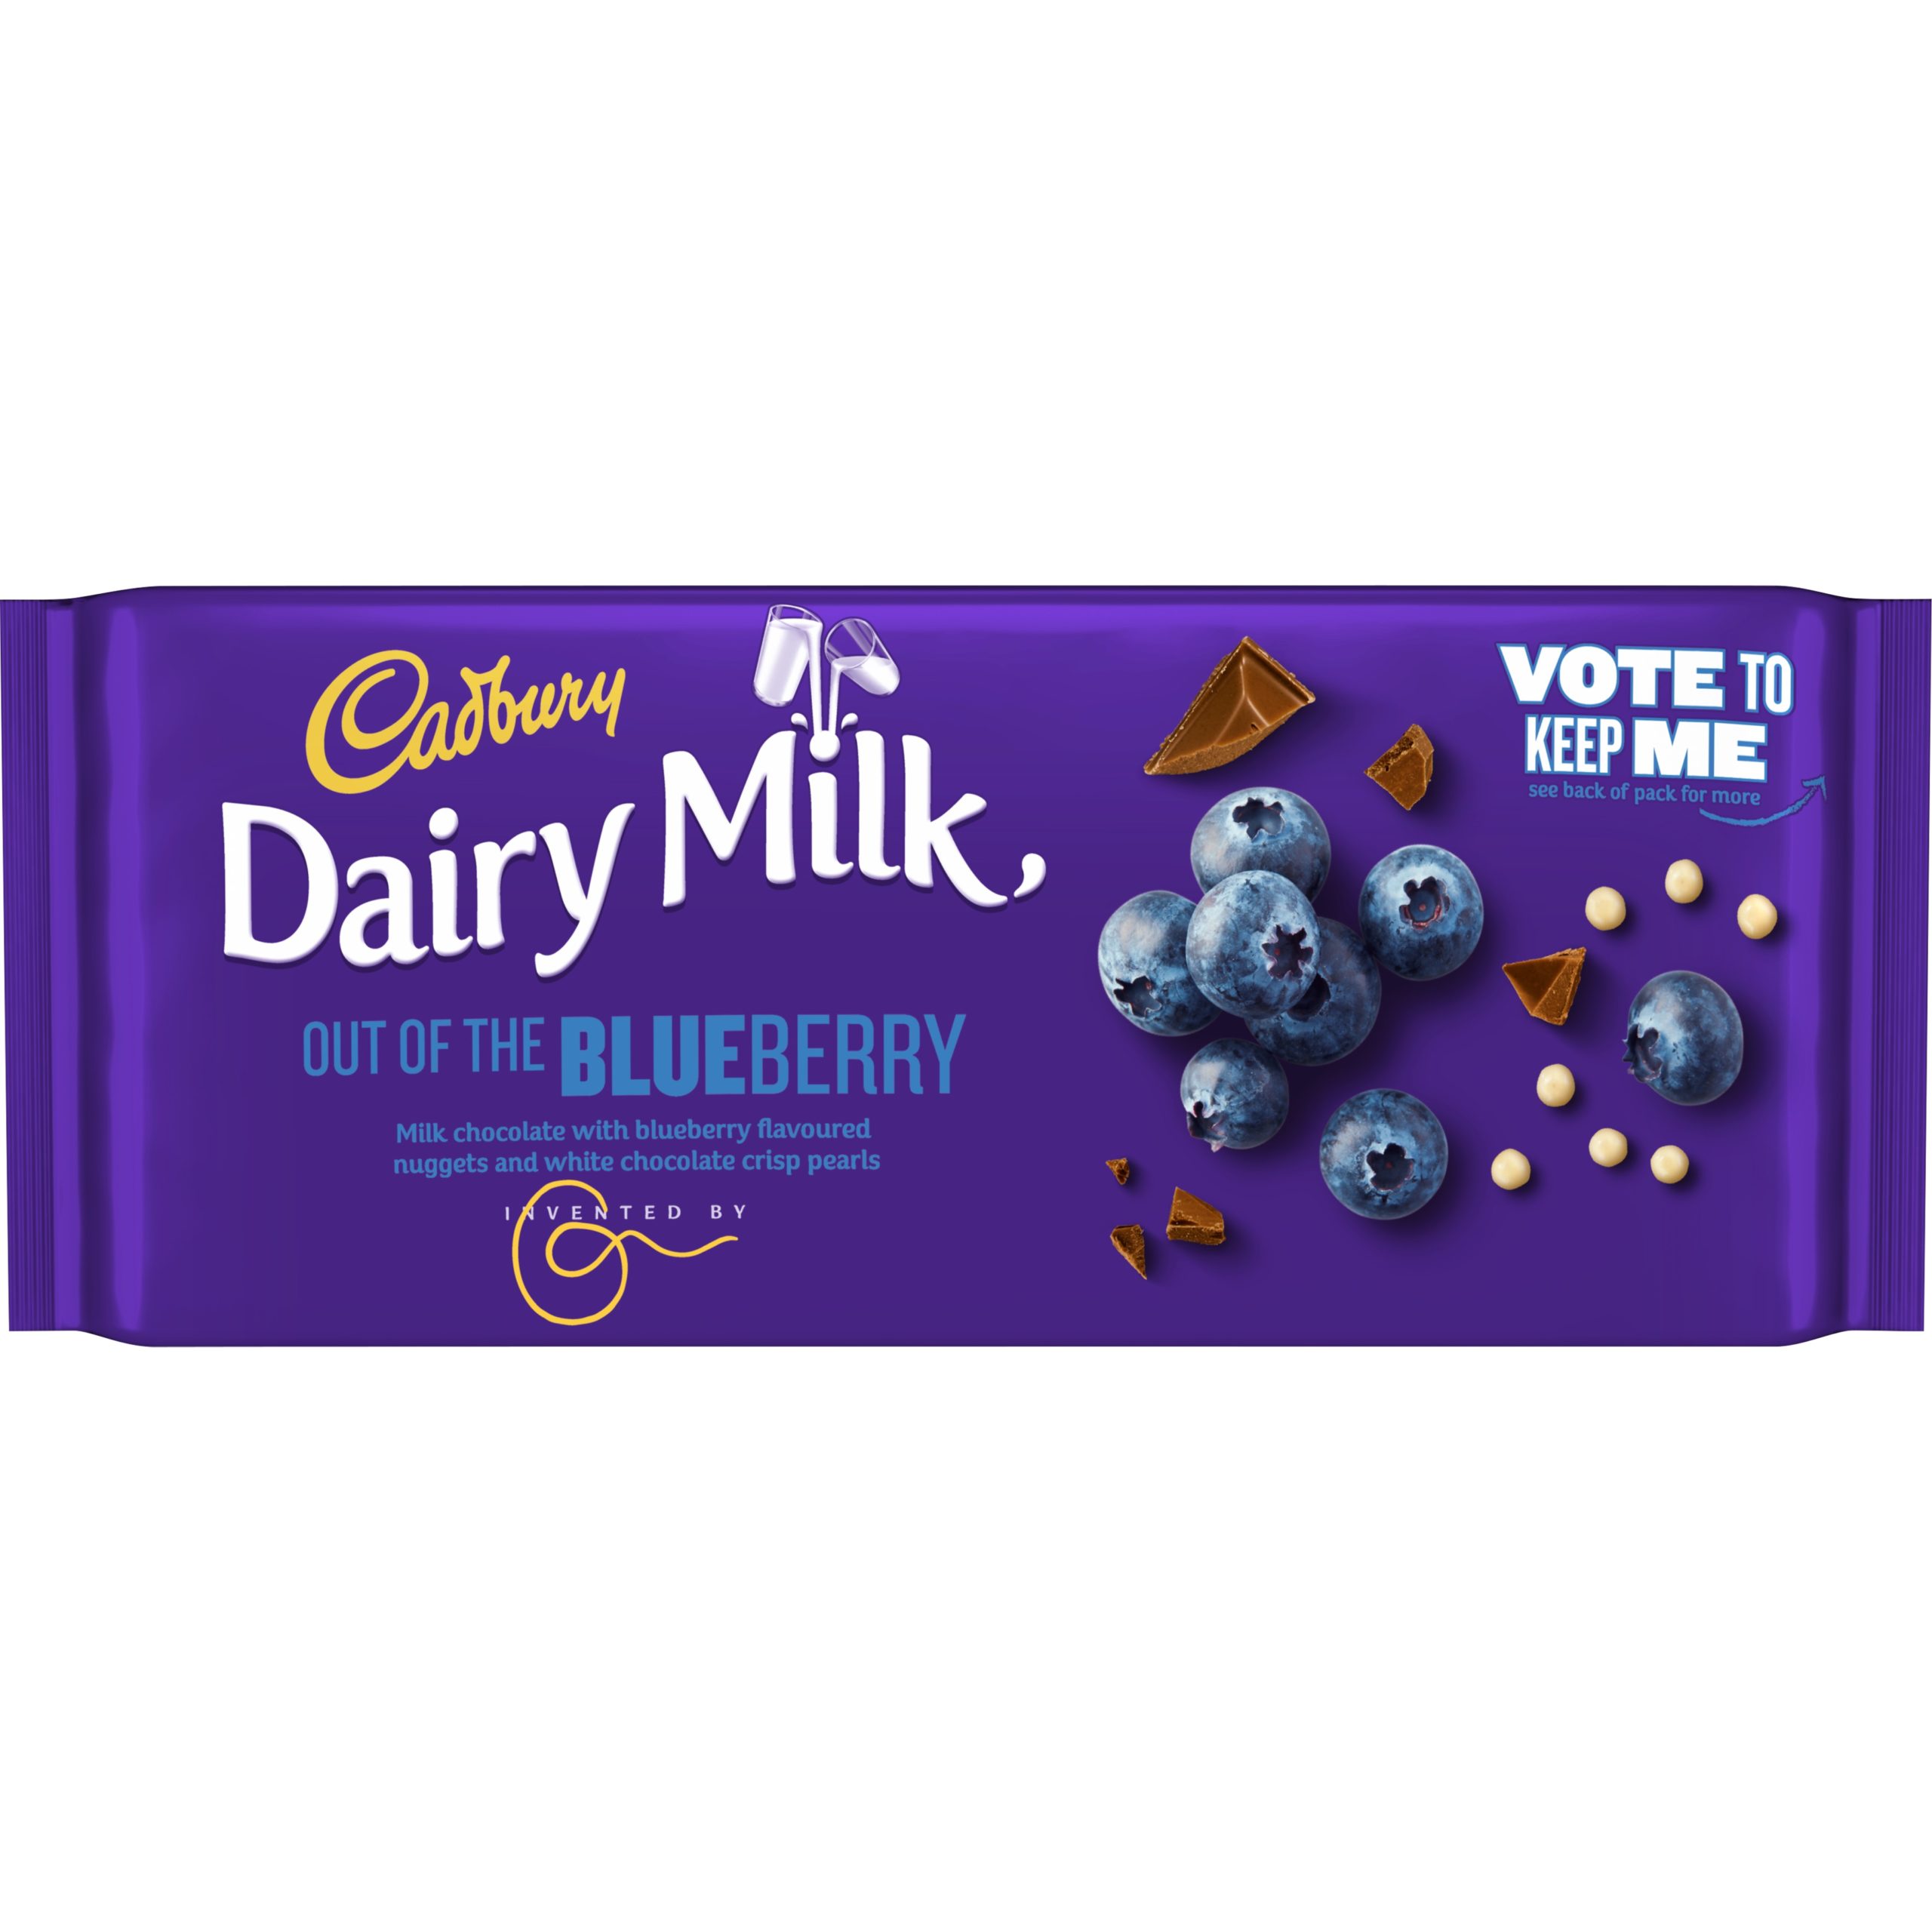 pricing strategy of cadbury dairy milk